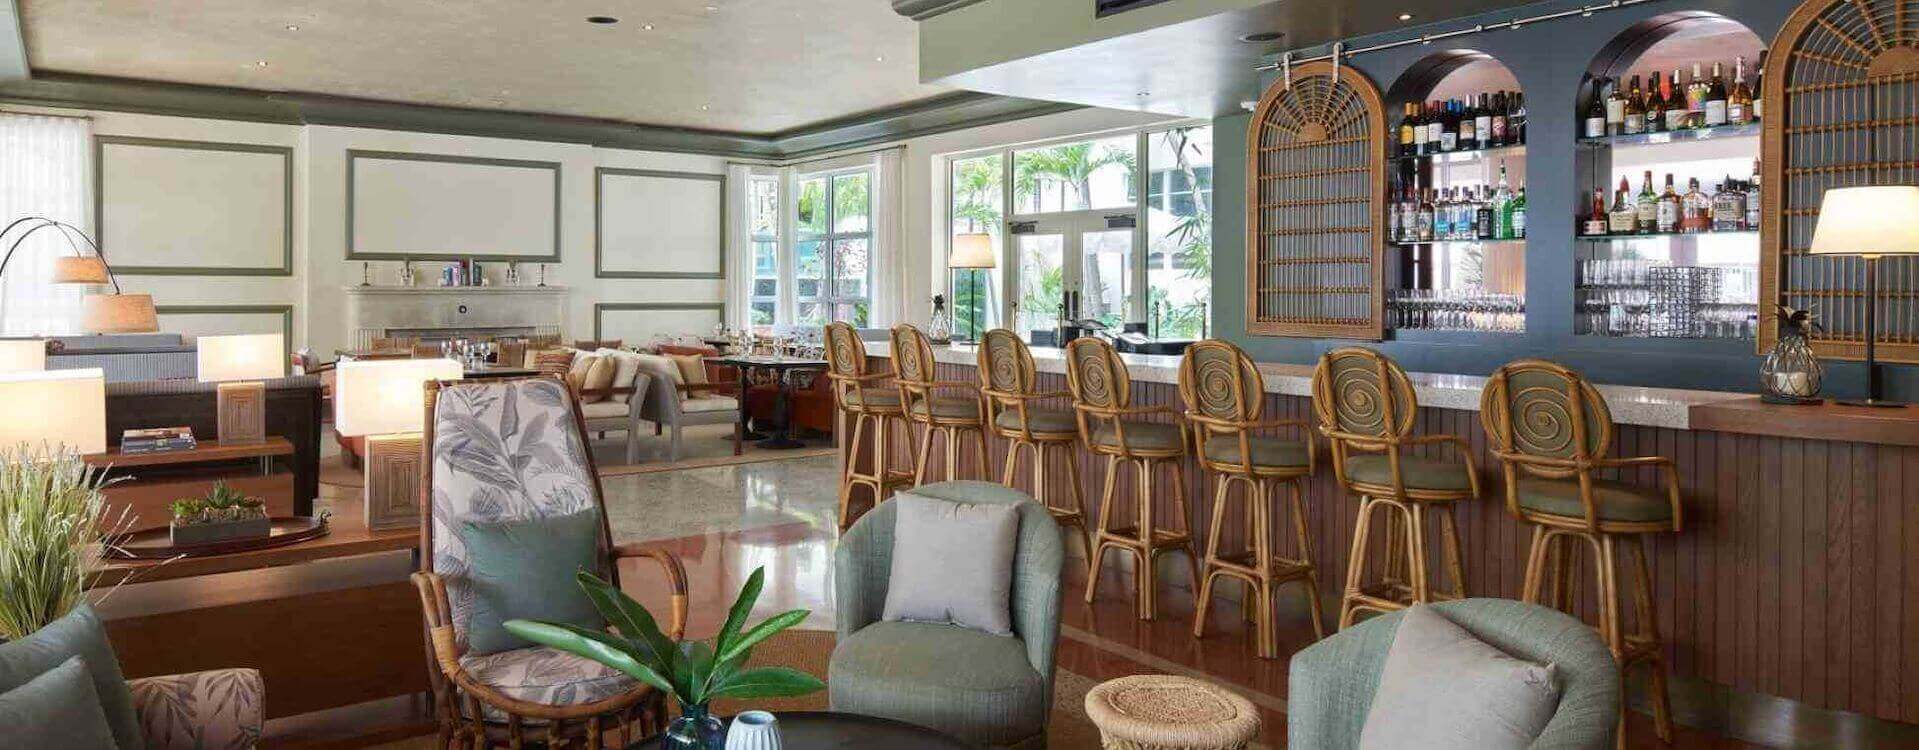 Cafeteria en Balfour Hotel, Miami beach